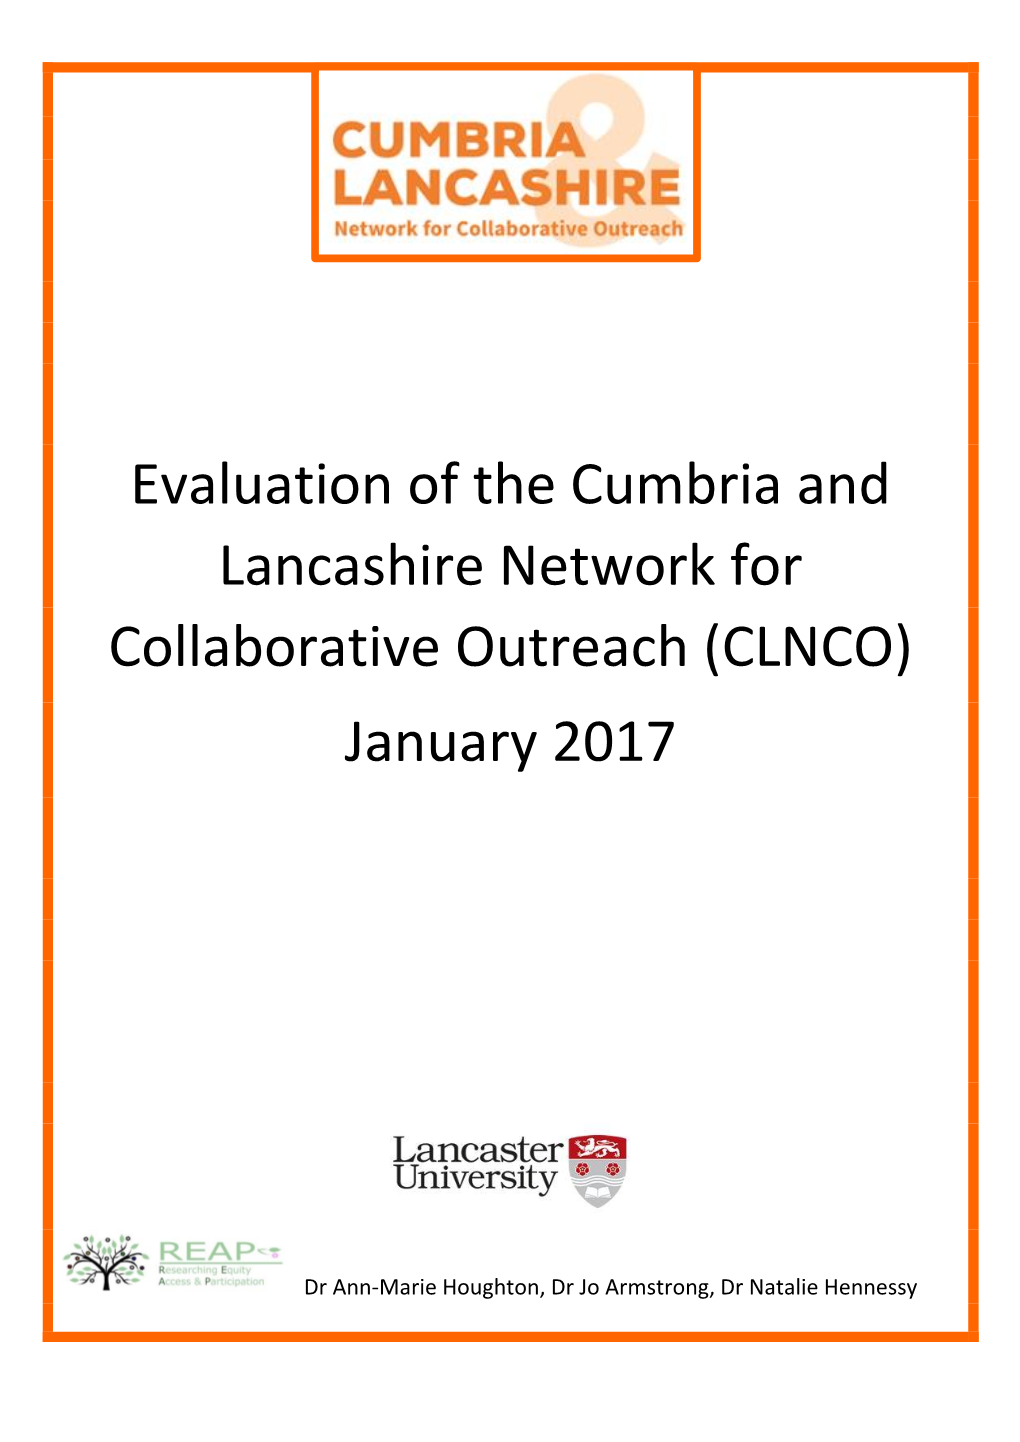 Cumbria and Lancashire Network for Collaborative Outreach (CLNCO) January 2017